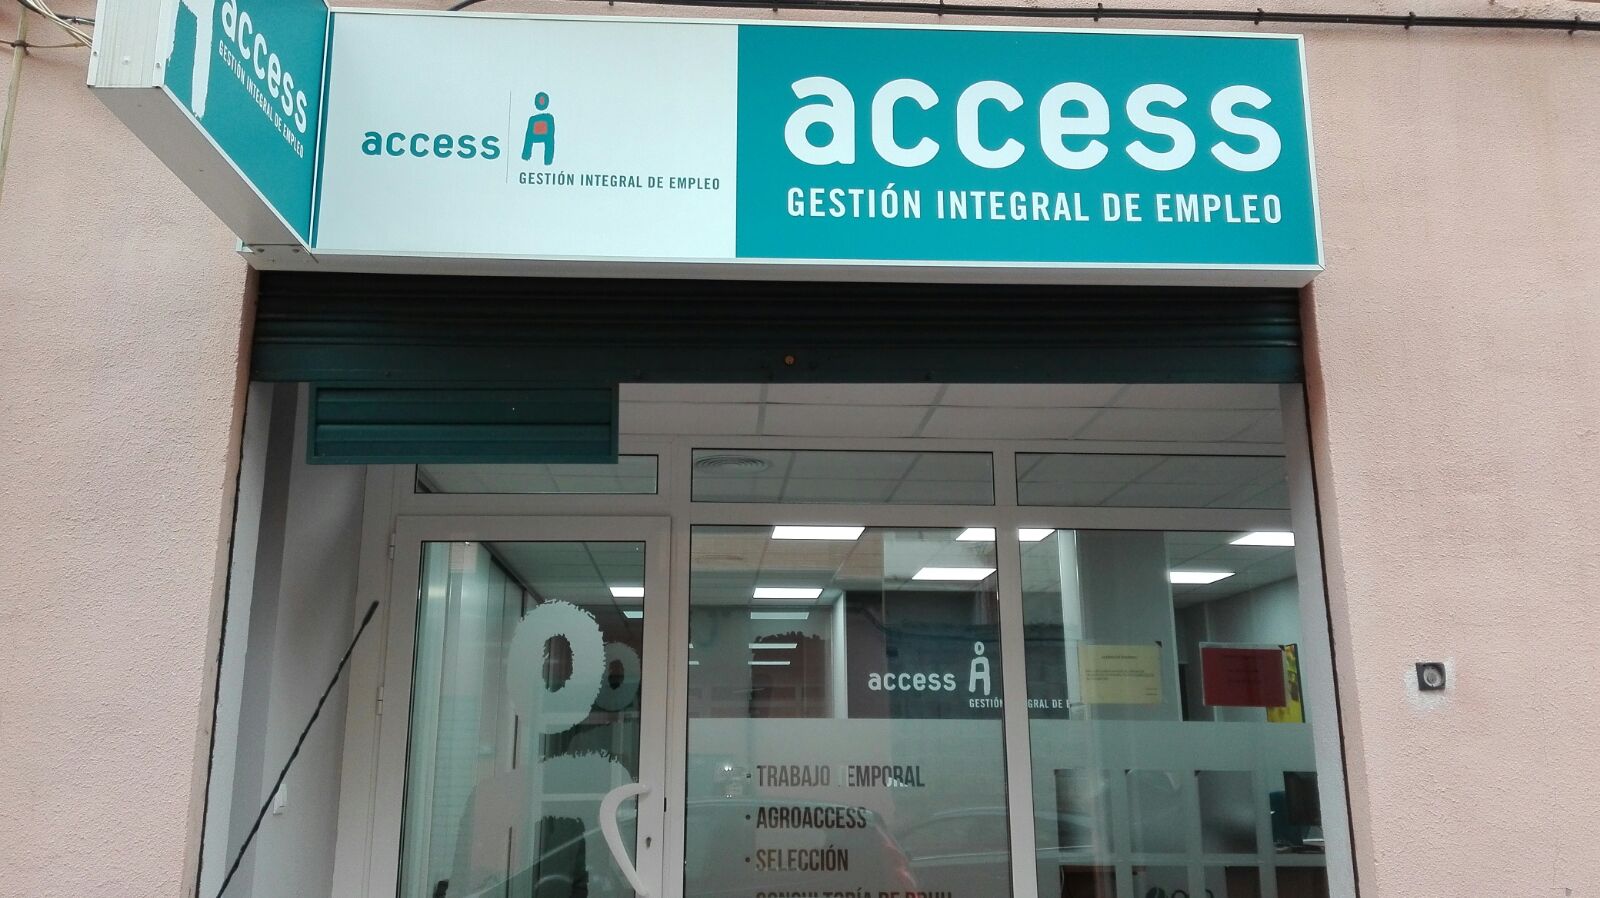 ETT Algemesí Access